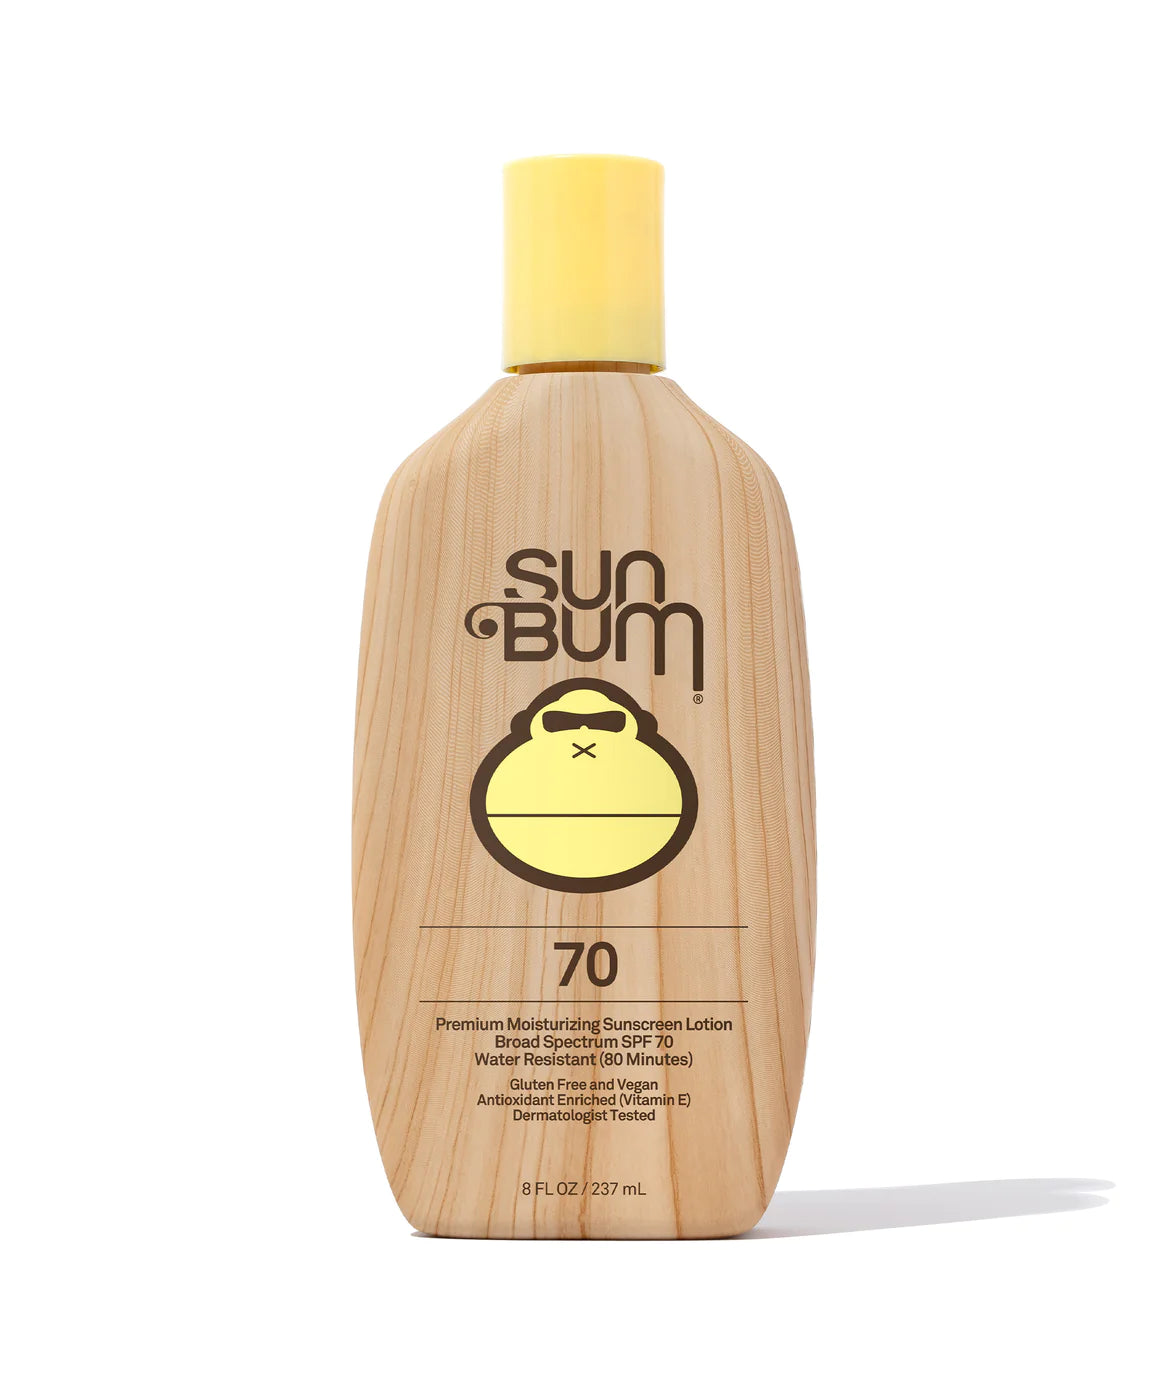 Sun Bum Original Sunscreen Lotion SPF 70, 8 oz